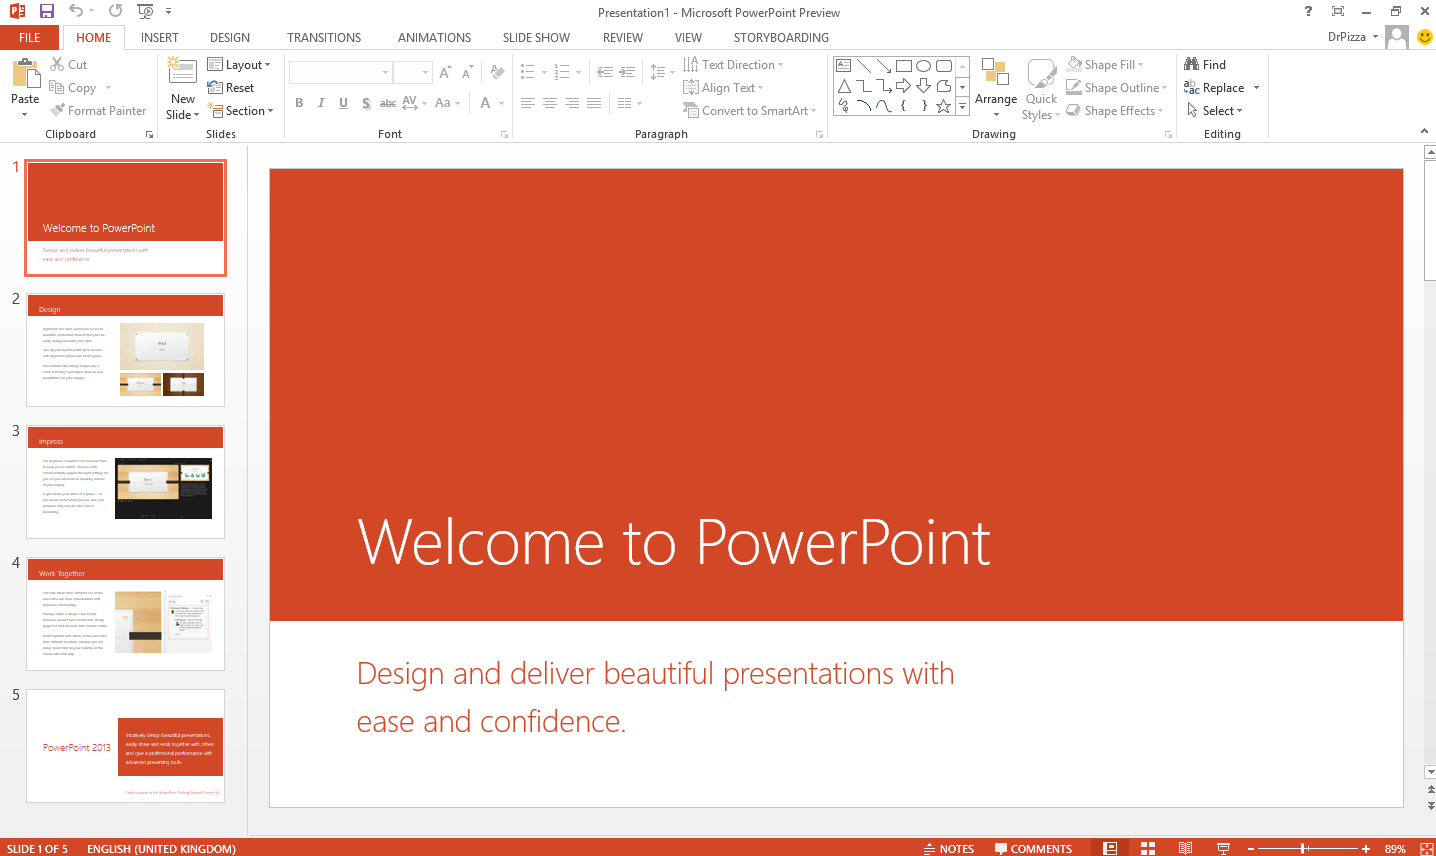 microsoft powerpoint presentation 2013 free download